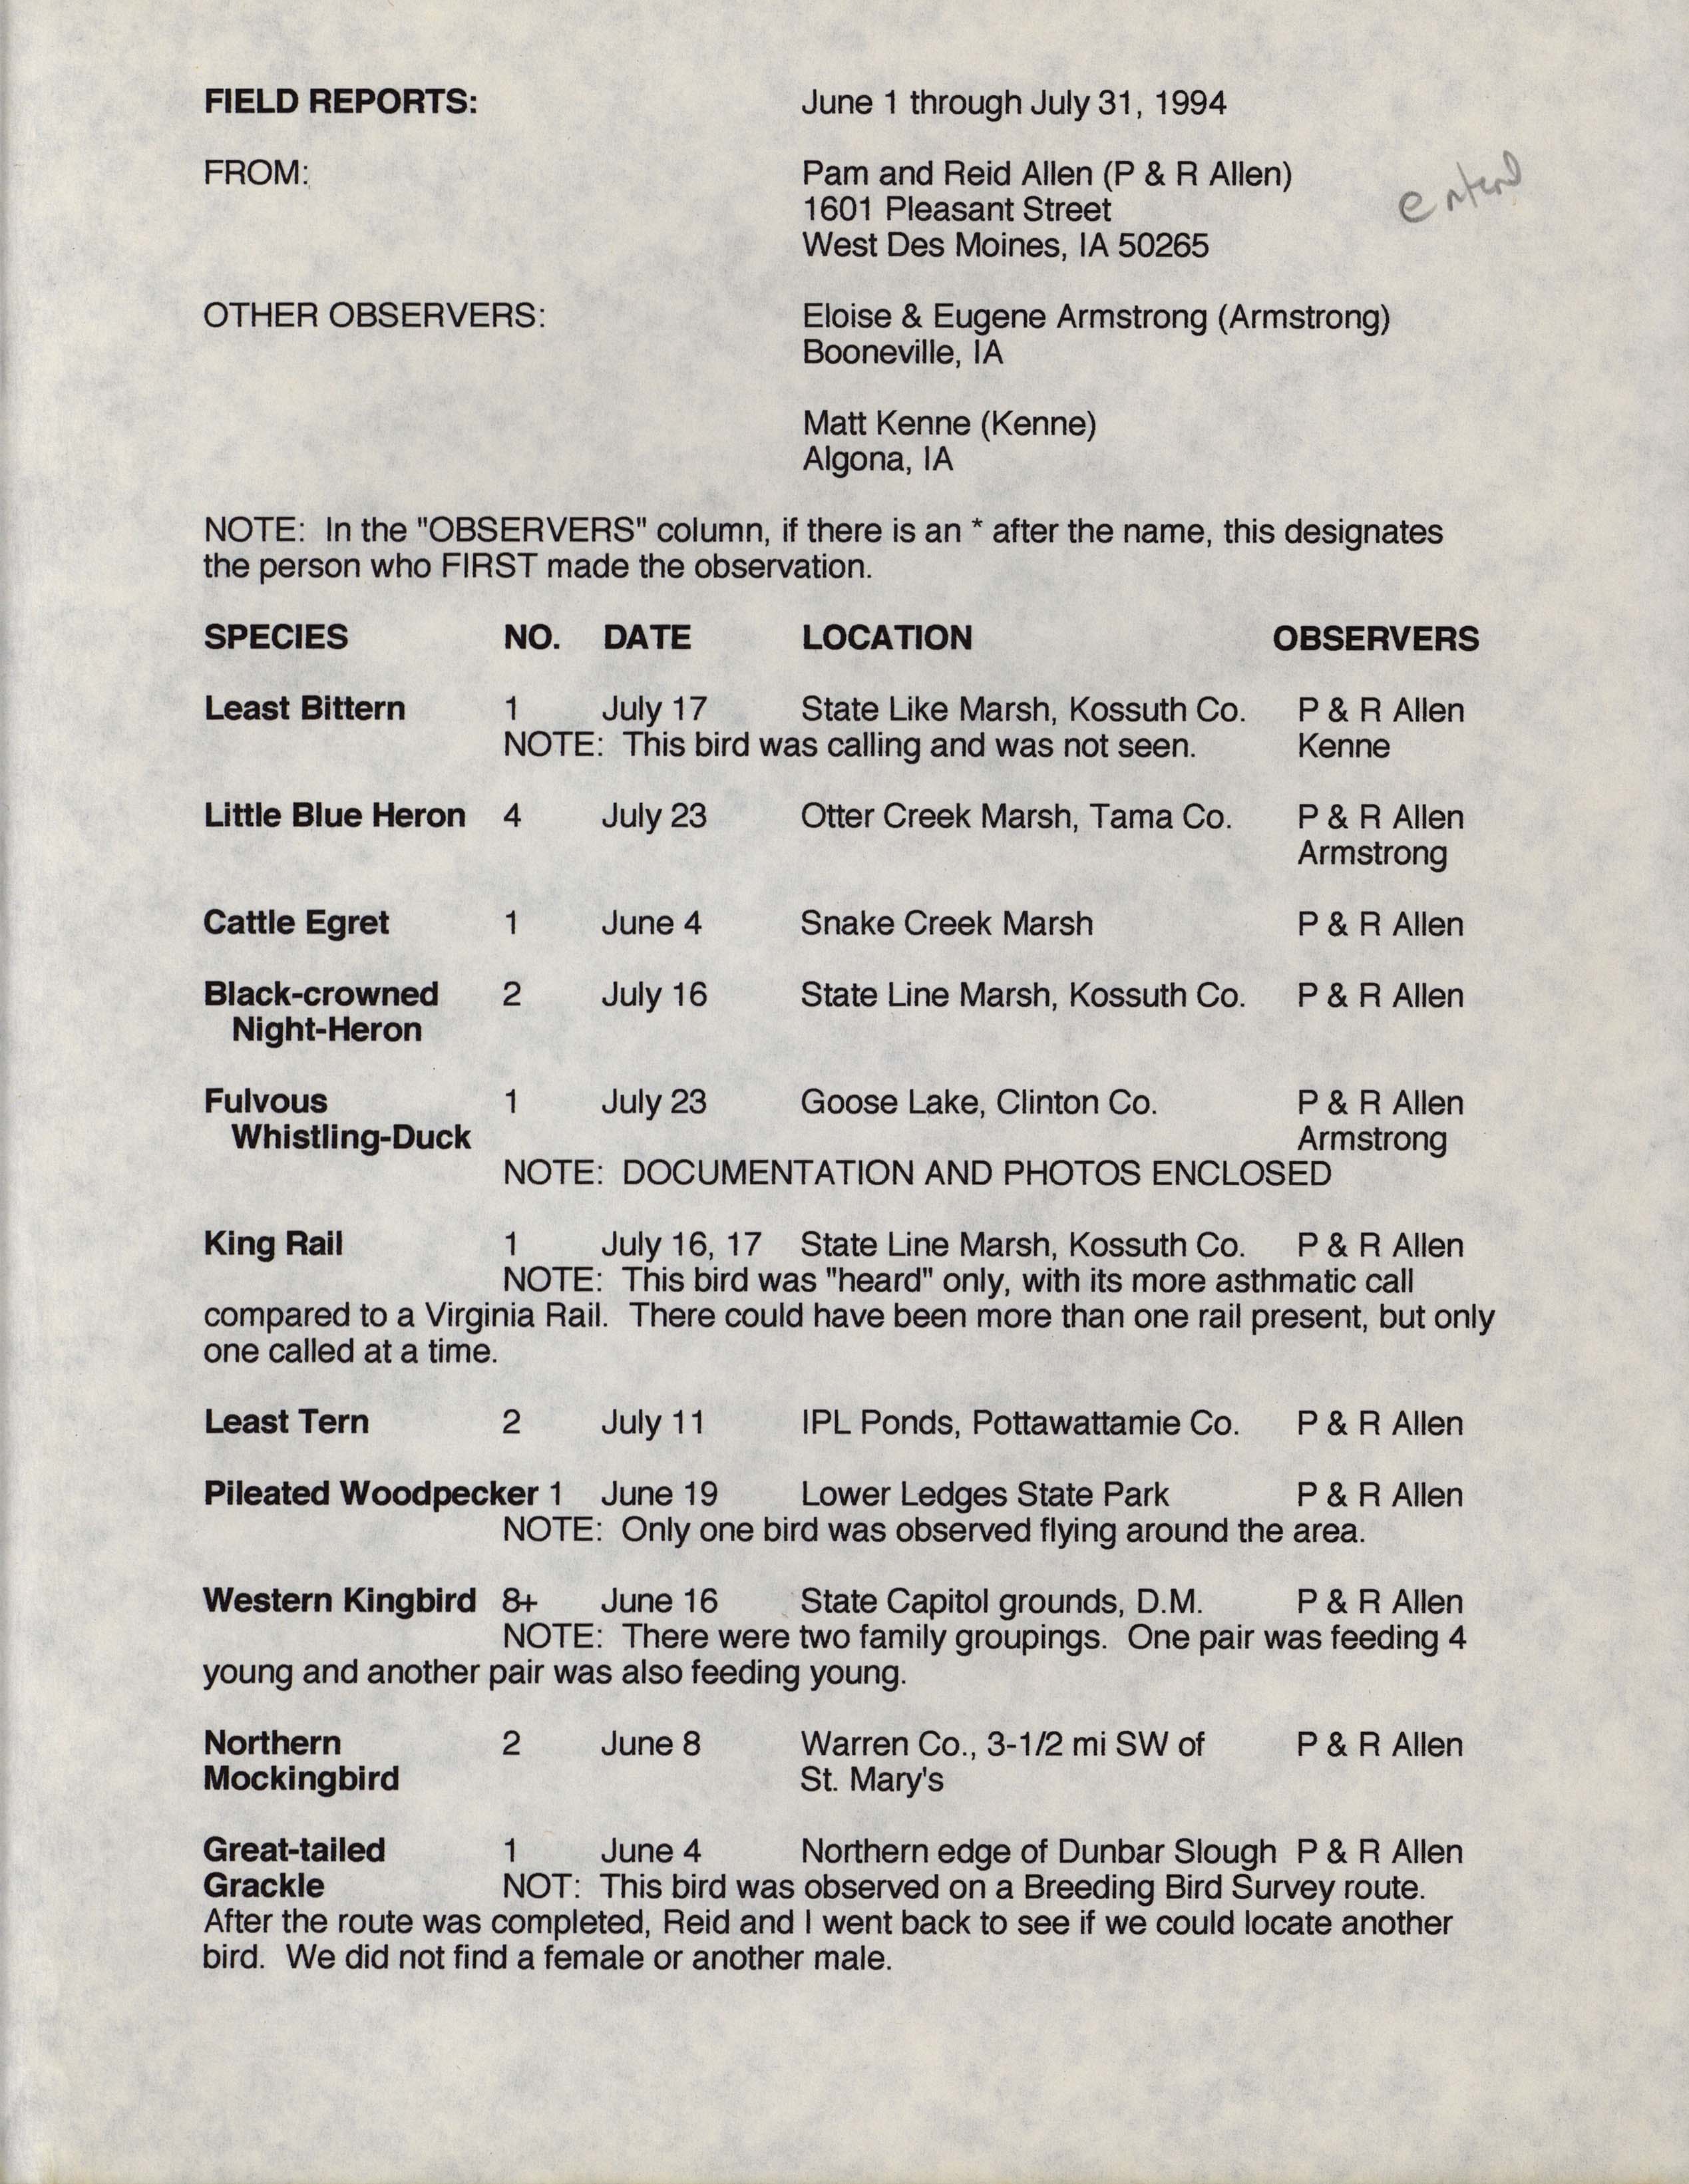 Field reports, June 1 through July 31, 1994, Pam and Reid Allen